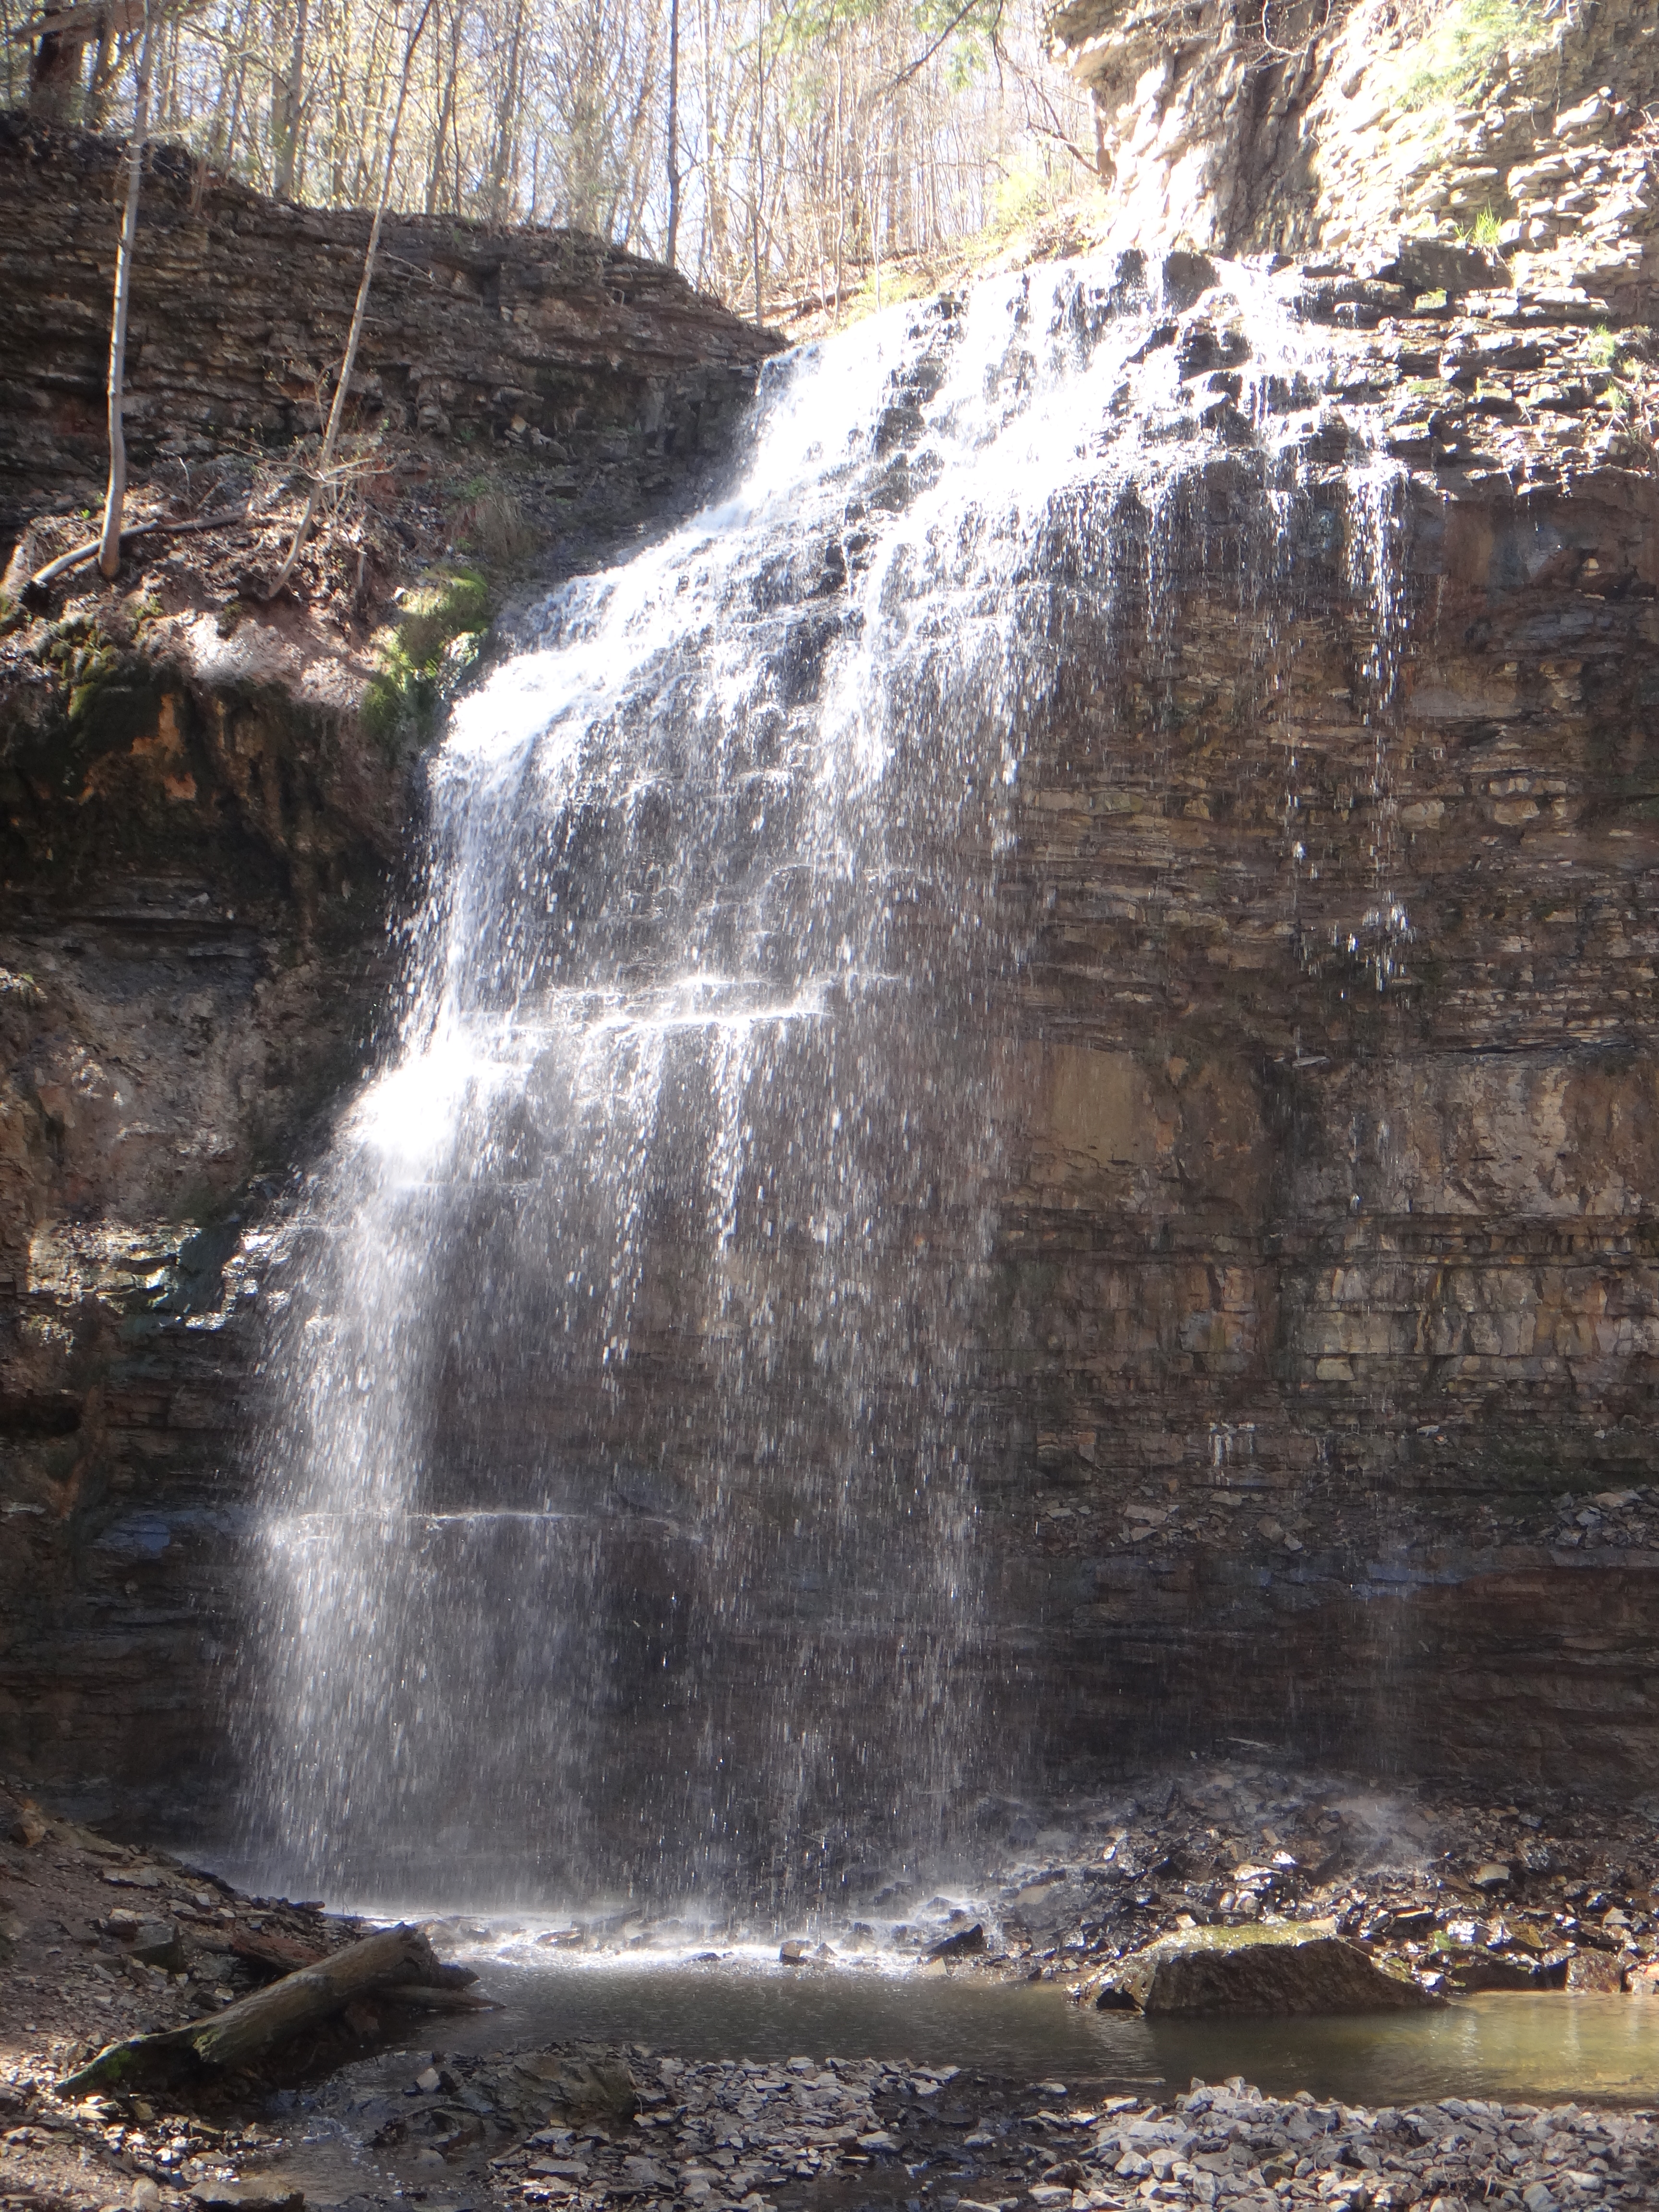 Stiles cove waterfall photo